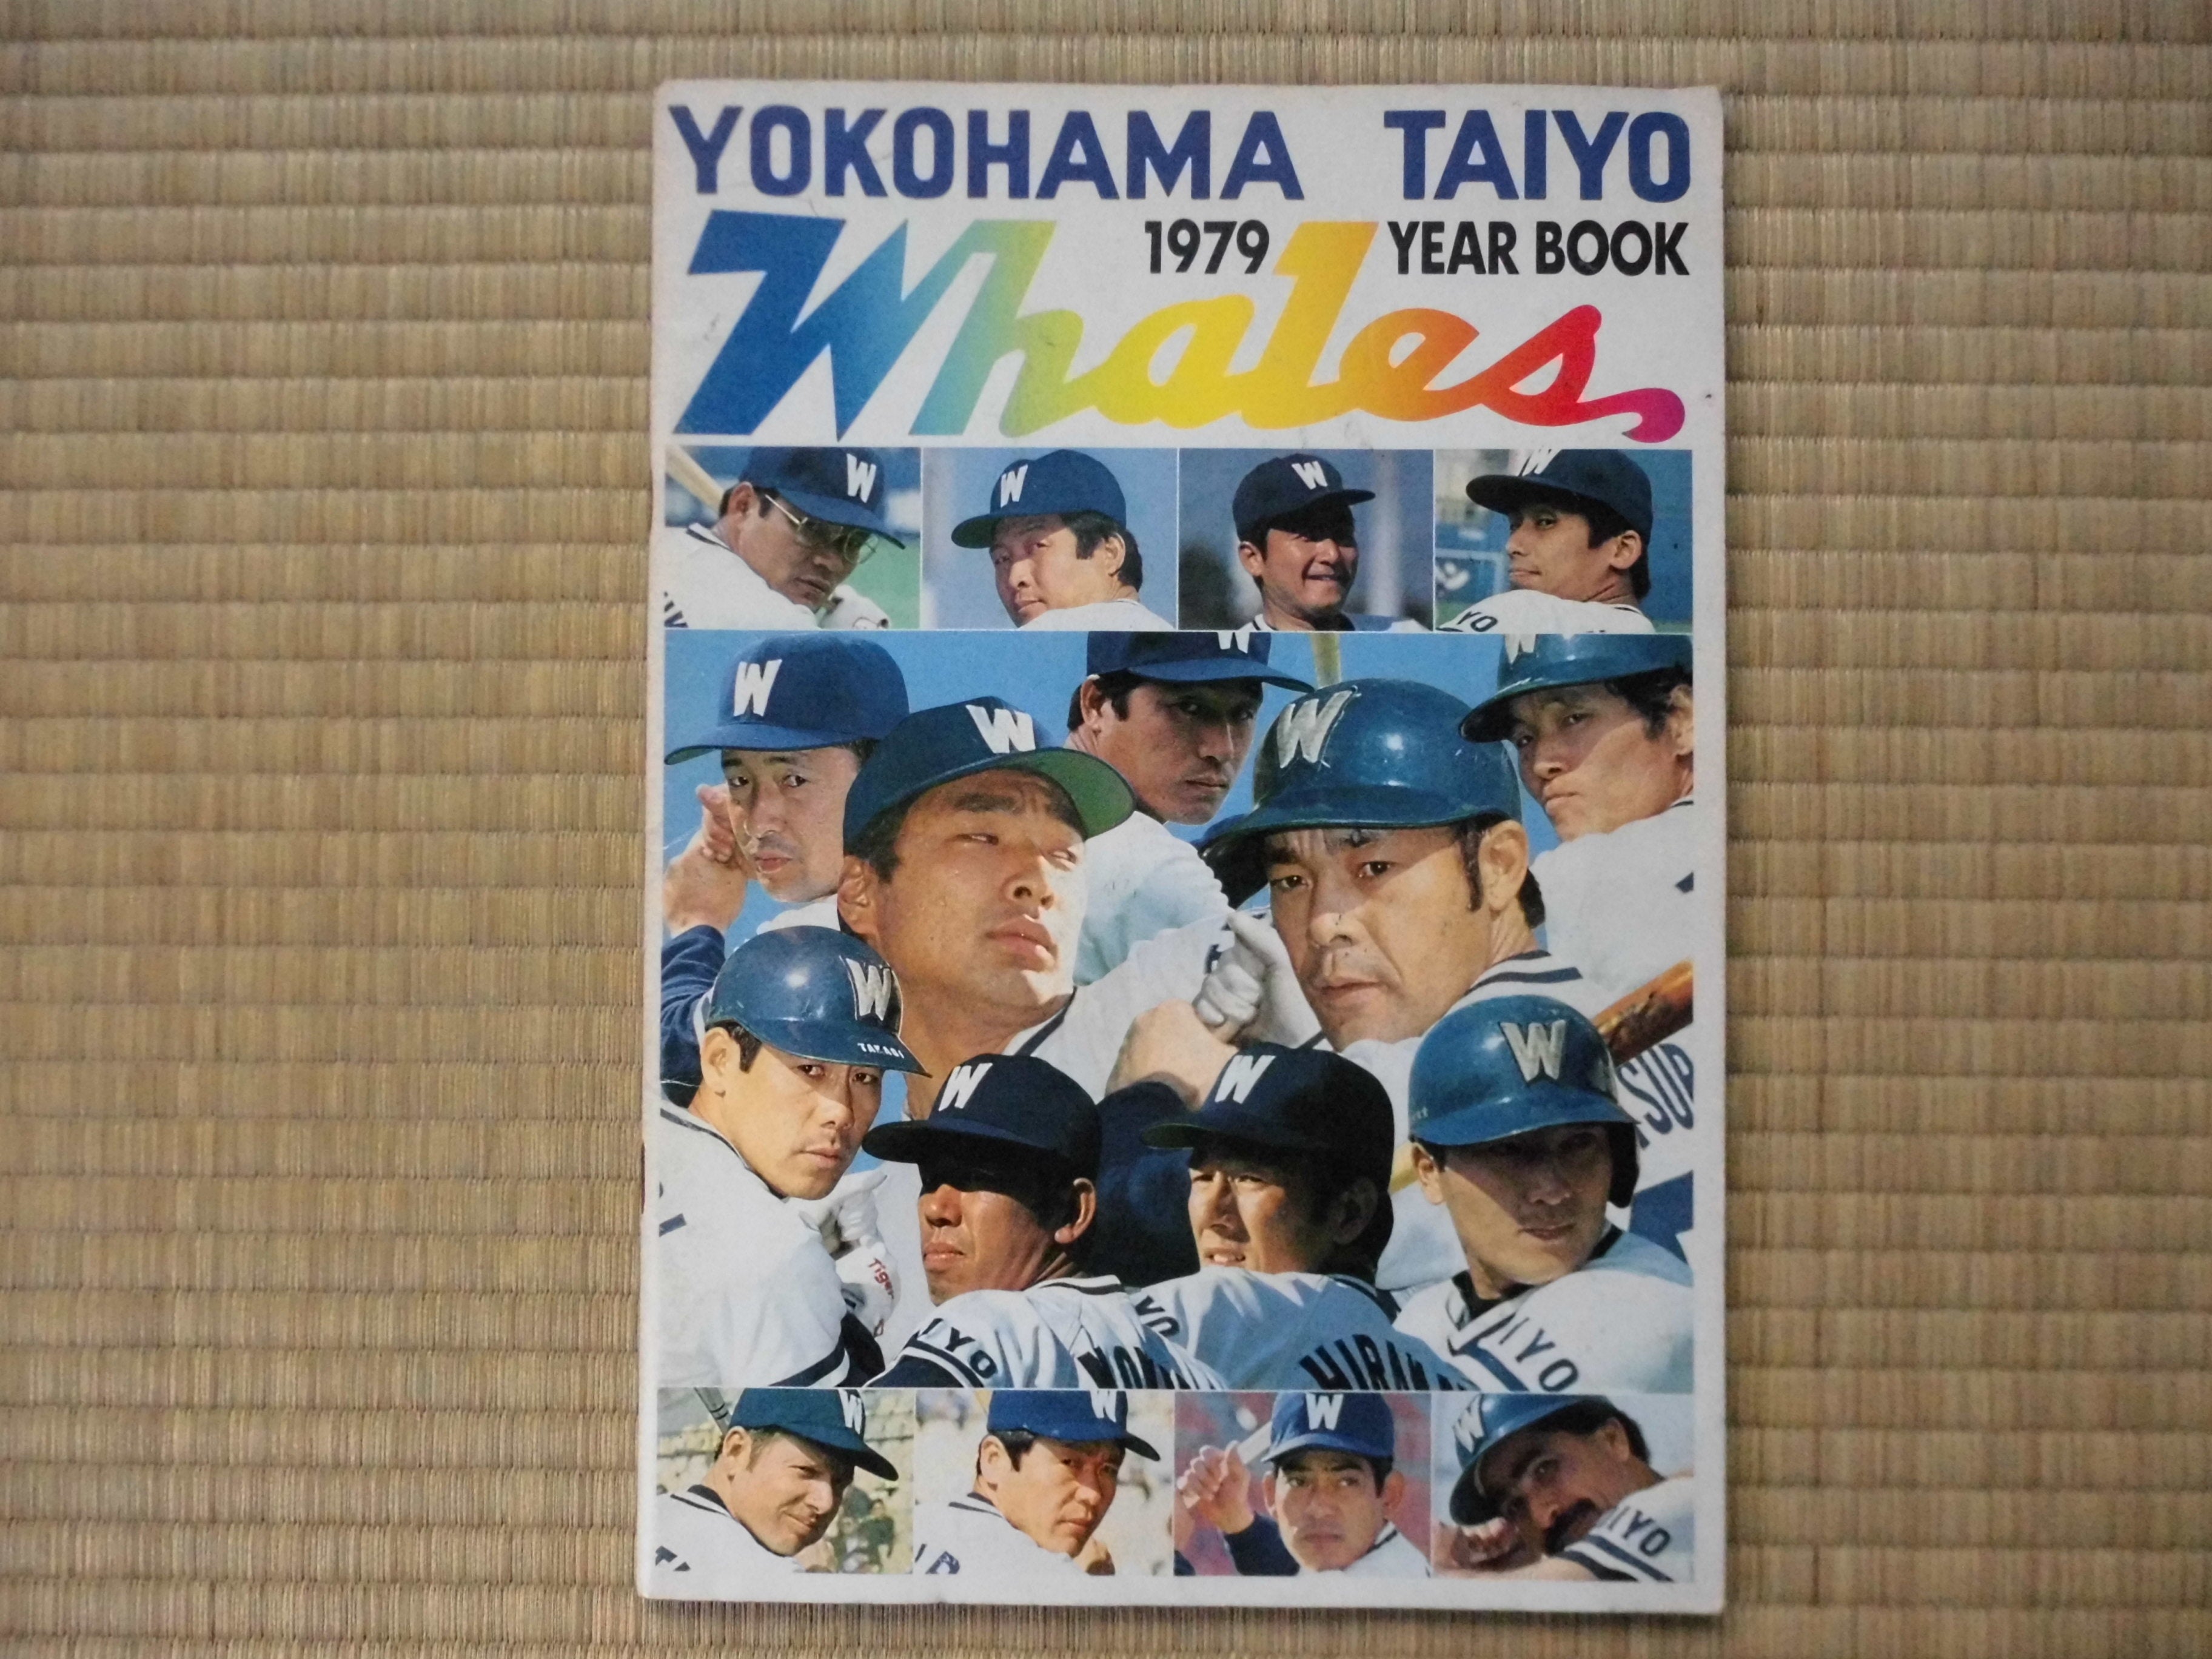 1979 YOKOHAMA TAIYO WHALES YEAR BOOK | 健全なVINYL中毒者ここにあり